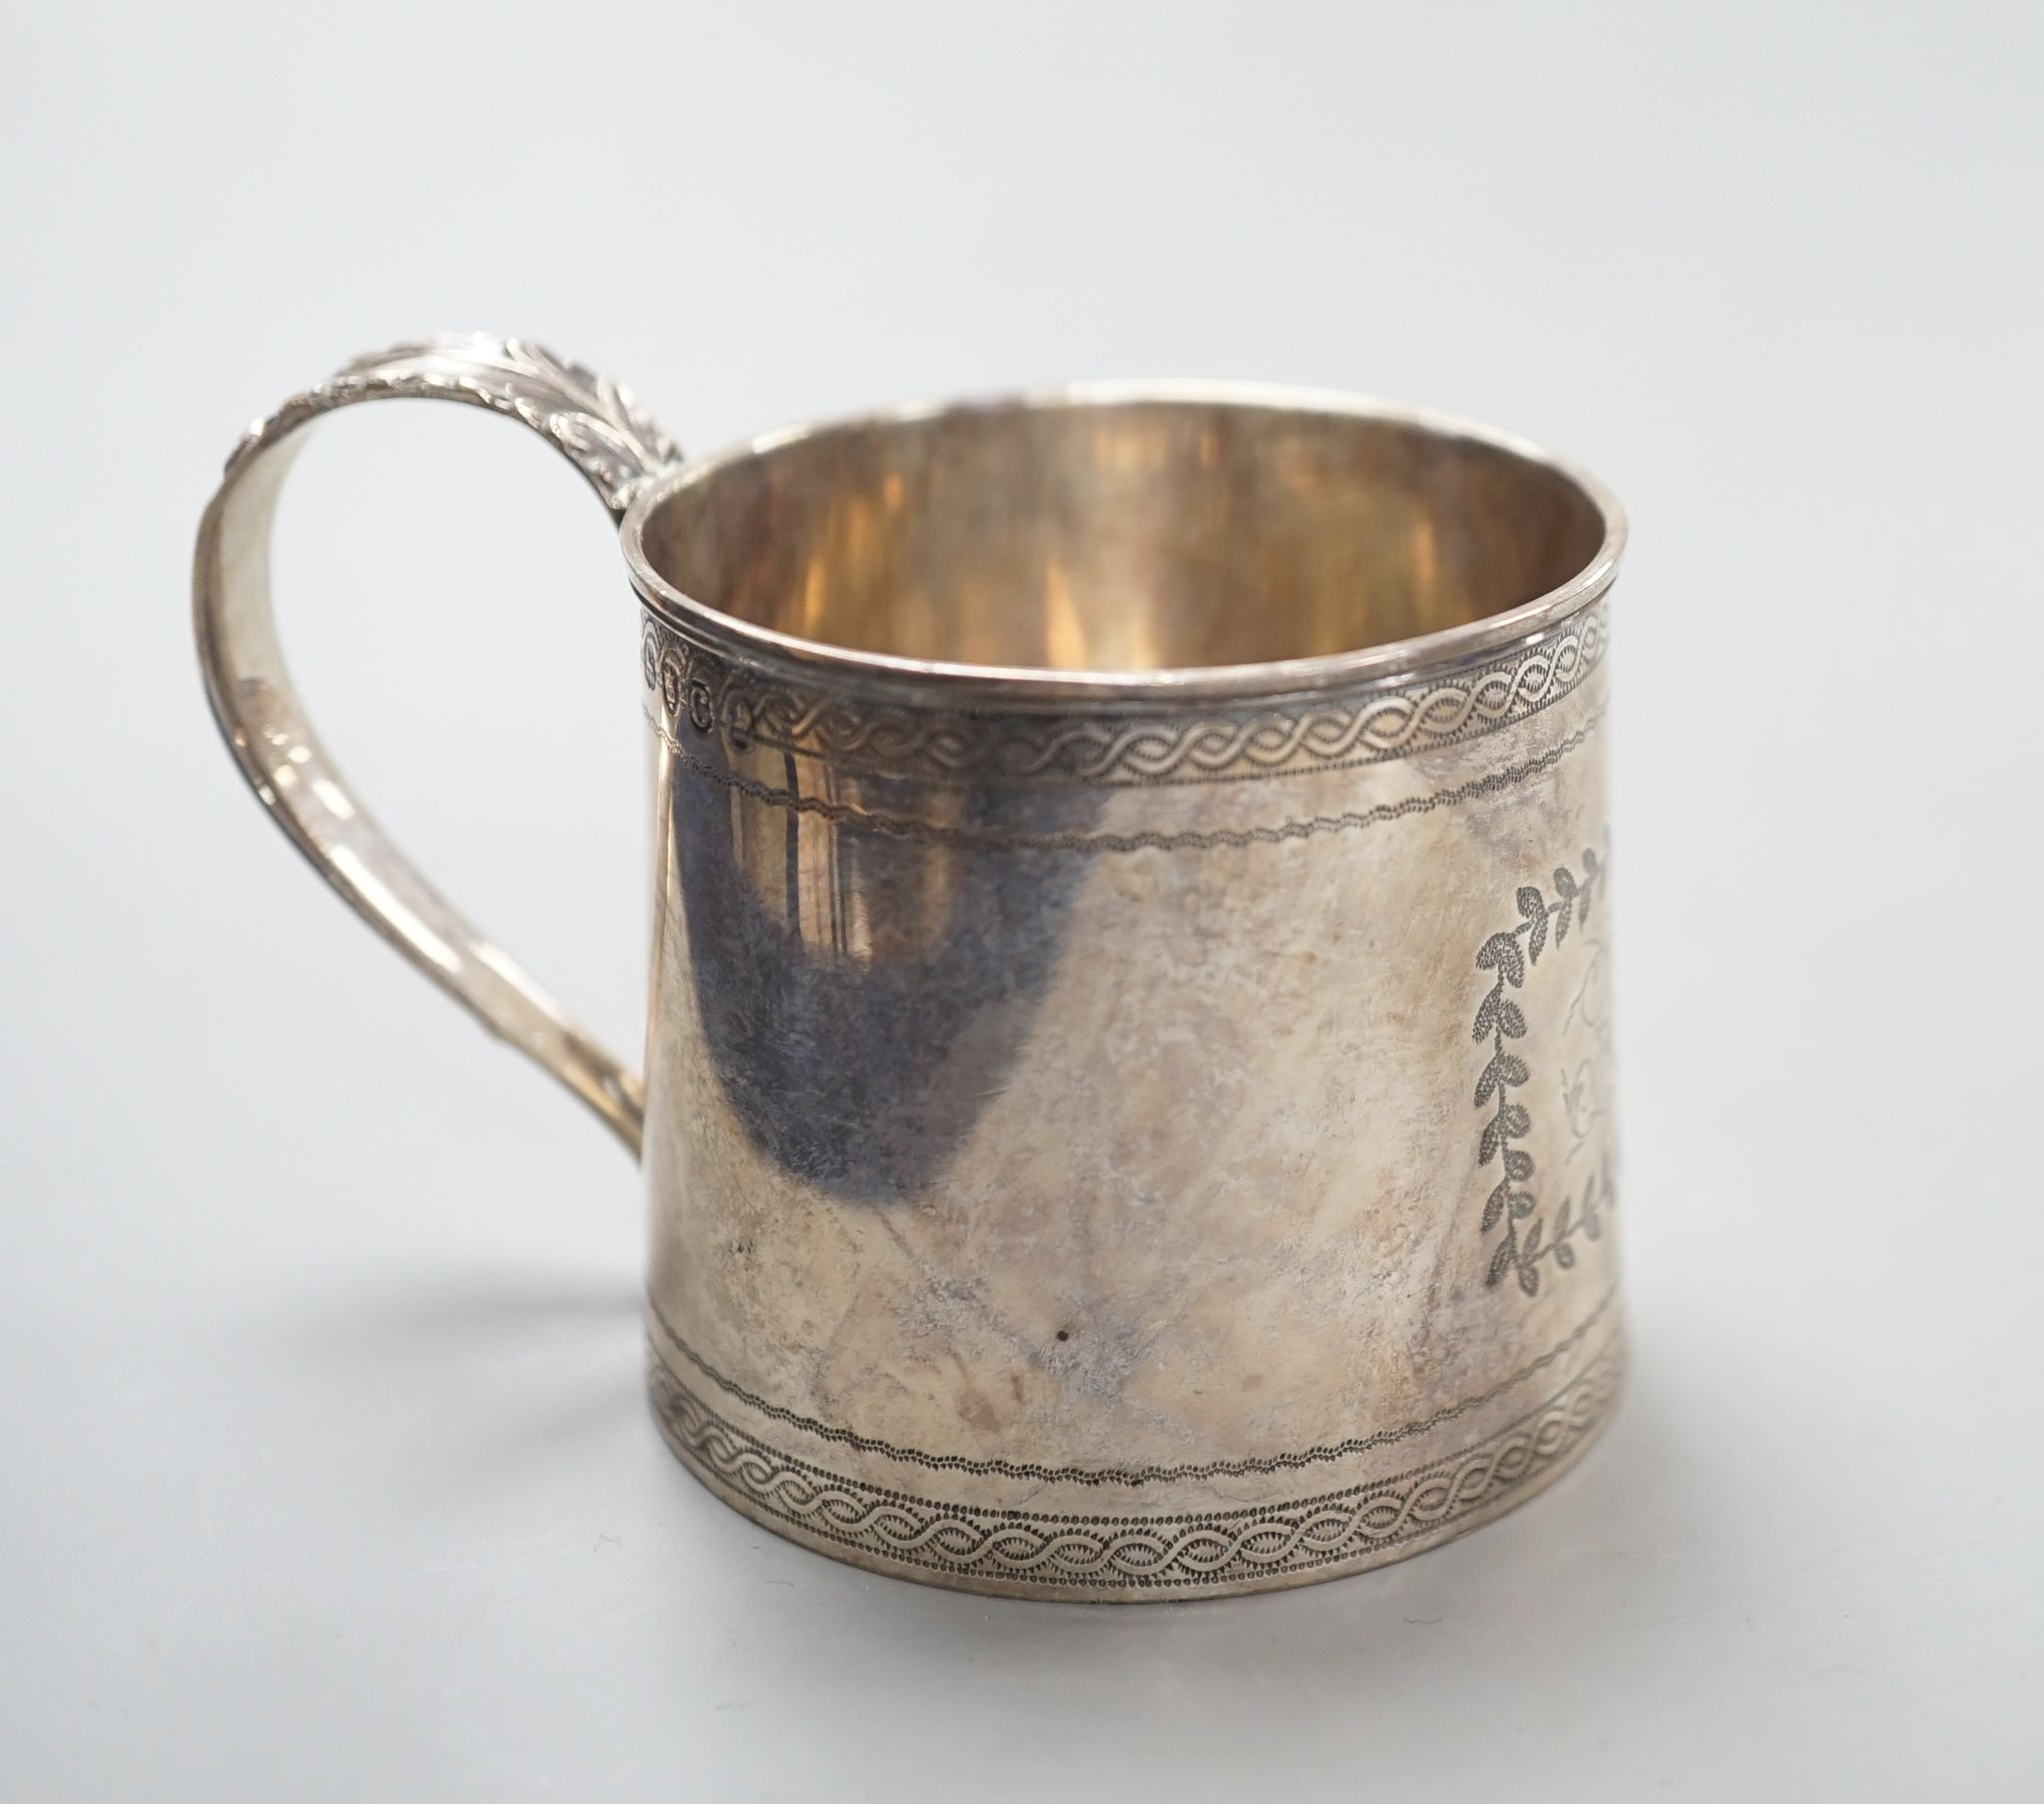 A George III silver small mug, Thomas Wallis & Jonthan Hayne, London, 1818, with engraved monogram, 57mm, 60 grams.